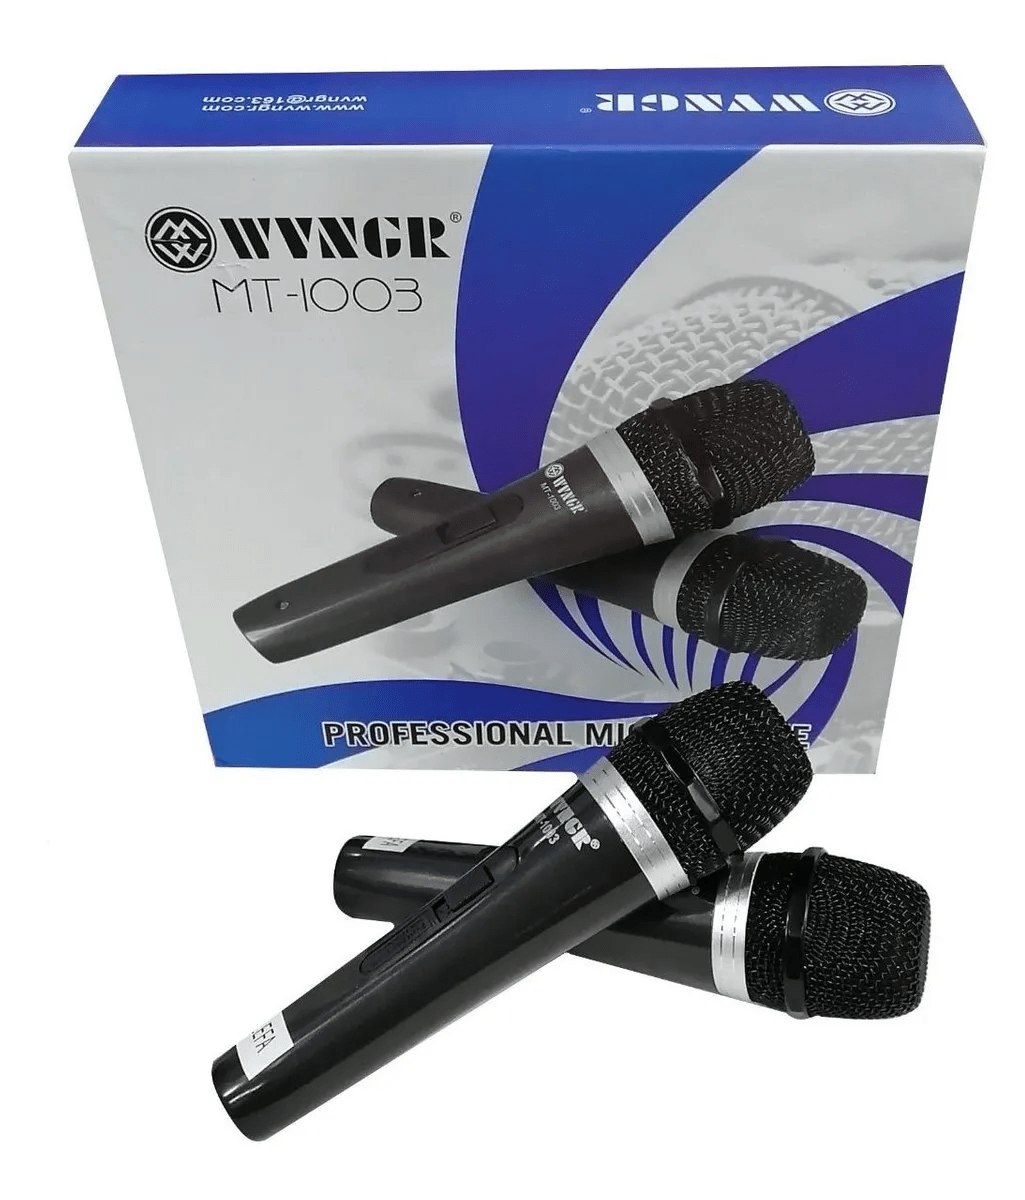 Microfone Duplo Profissional C/fio 5m Metal Le-1003